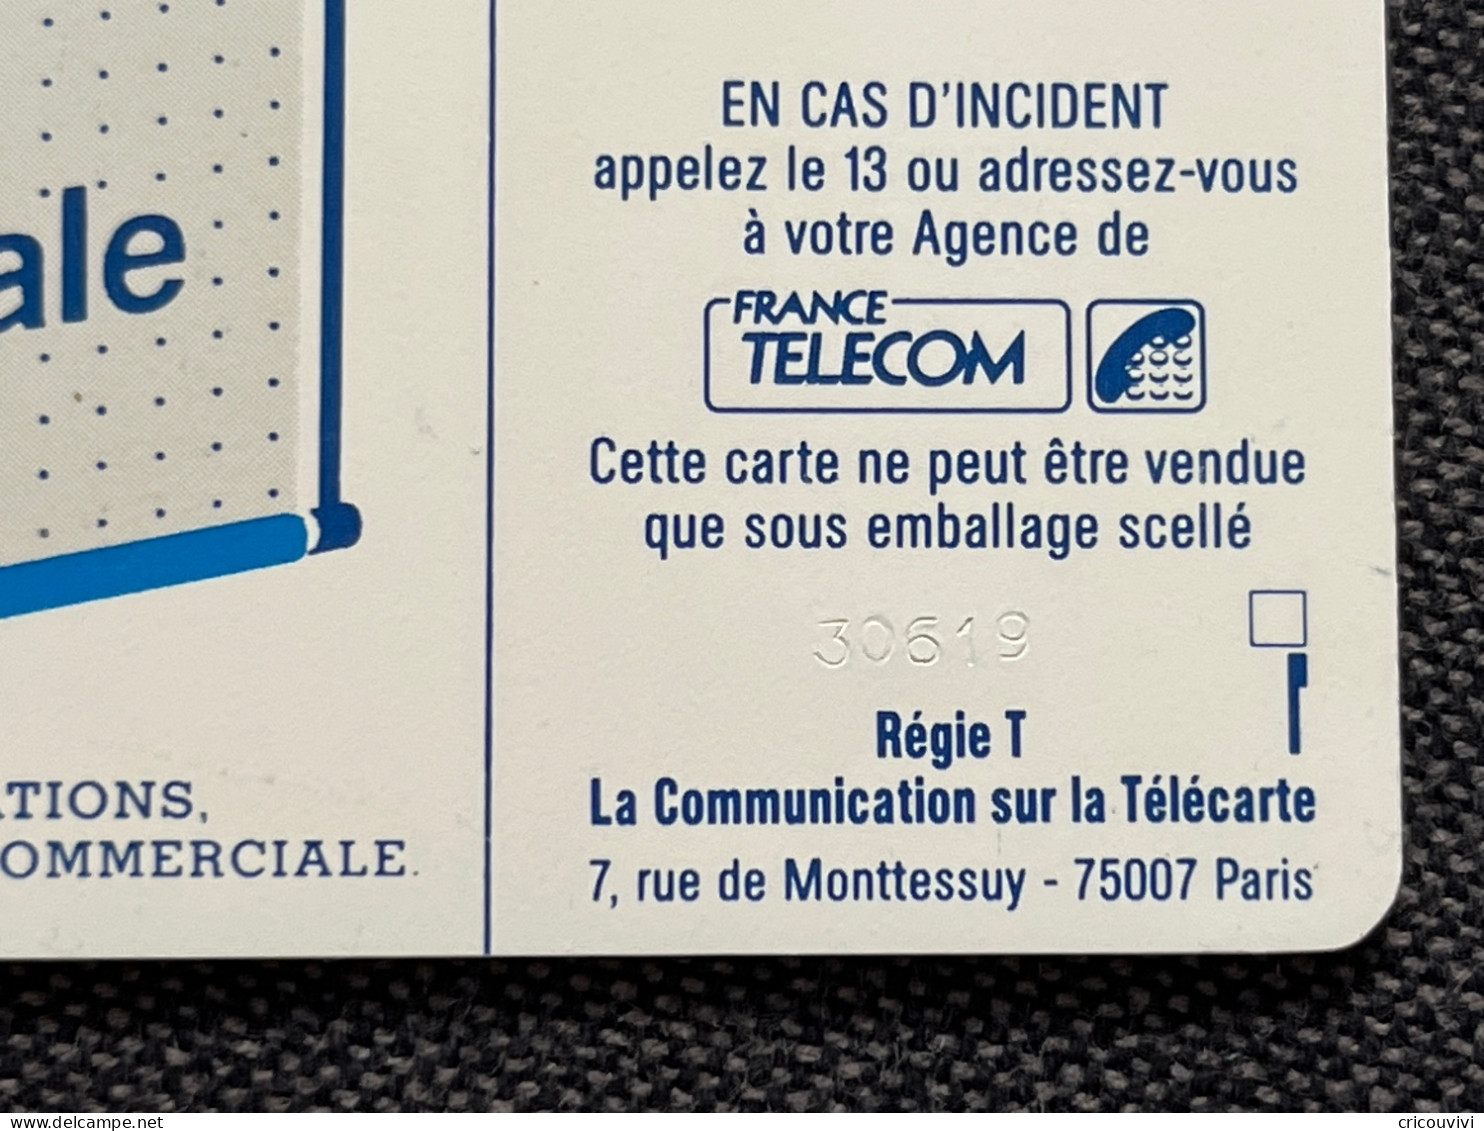 600 Agence Te14C-510 - 600 Agences